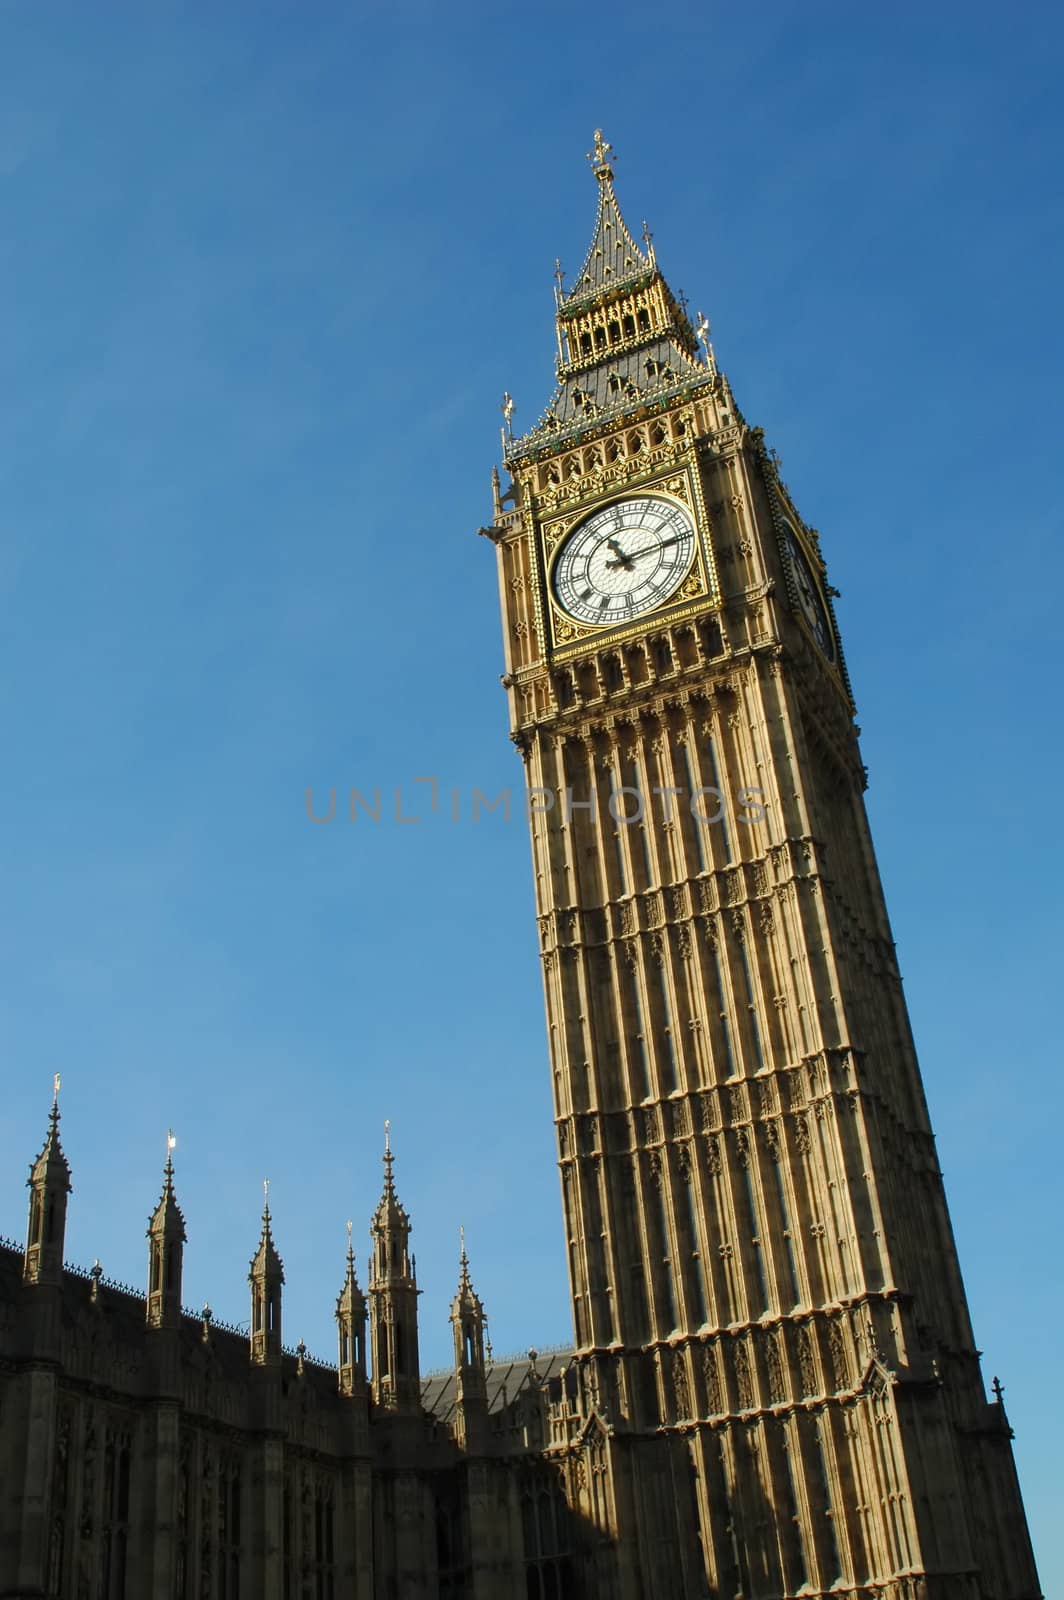 london's famous big ben bell tower landmark